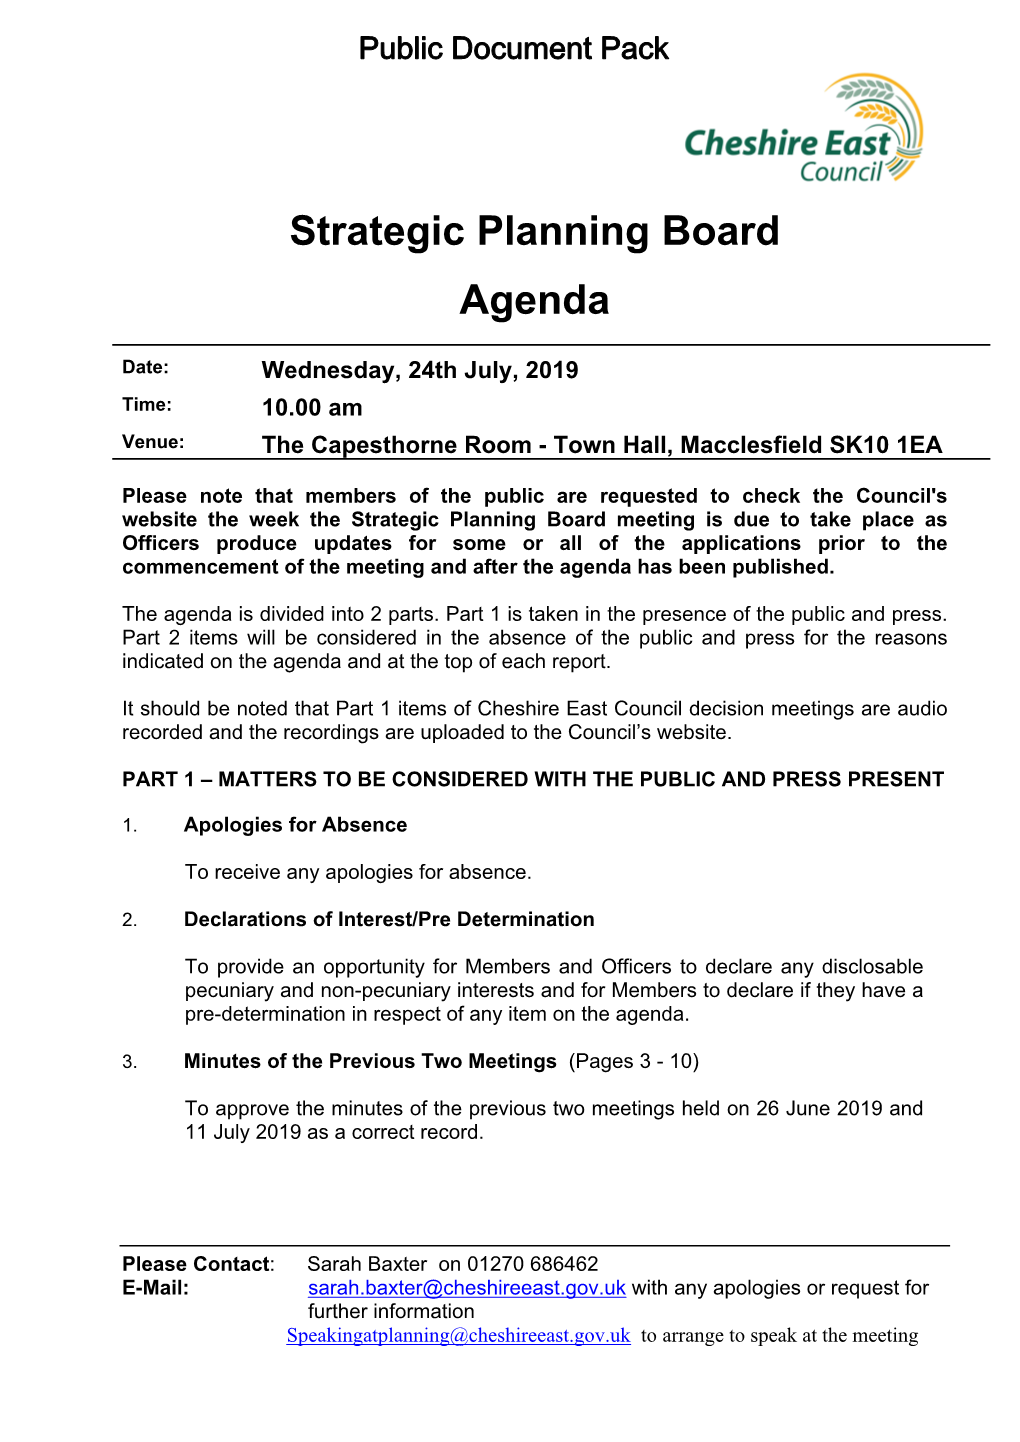 Agenda Document for Strategic Planning Board, 24/07/2019 10:00